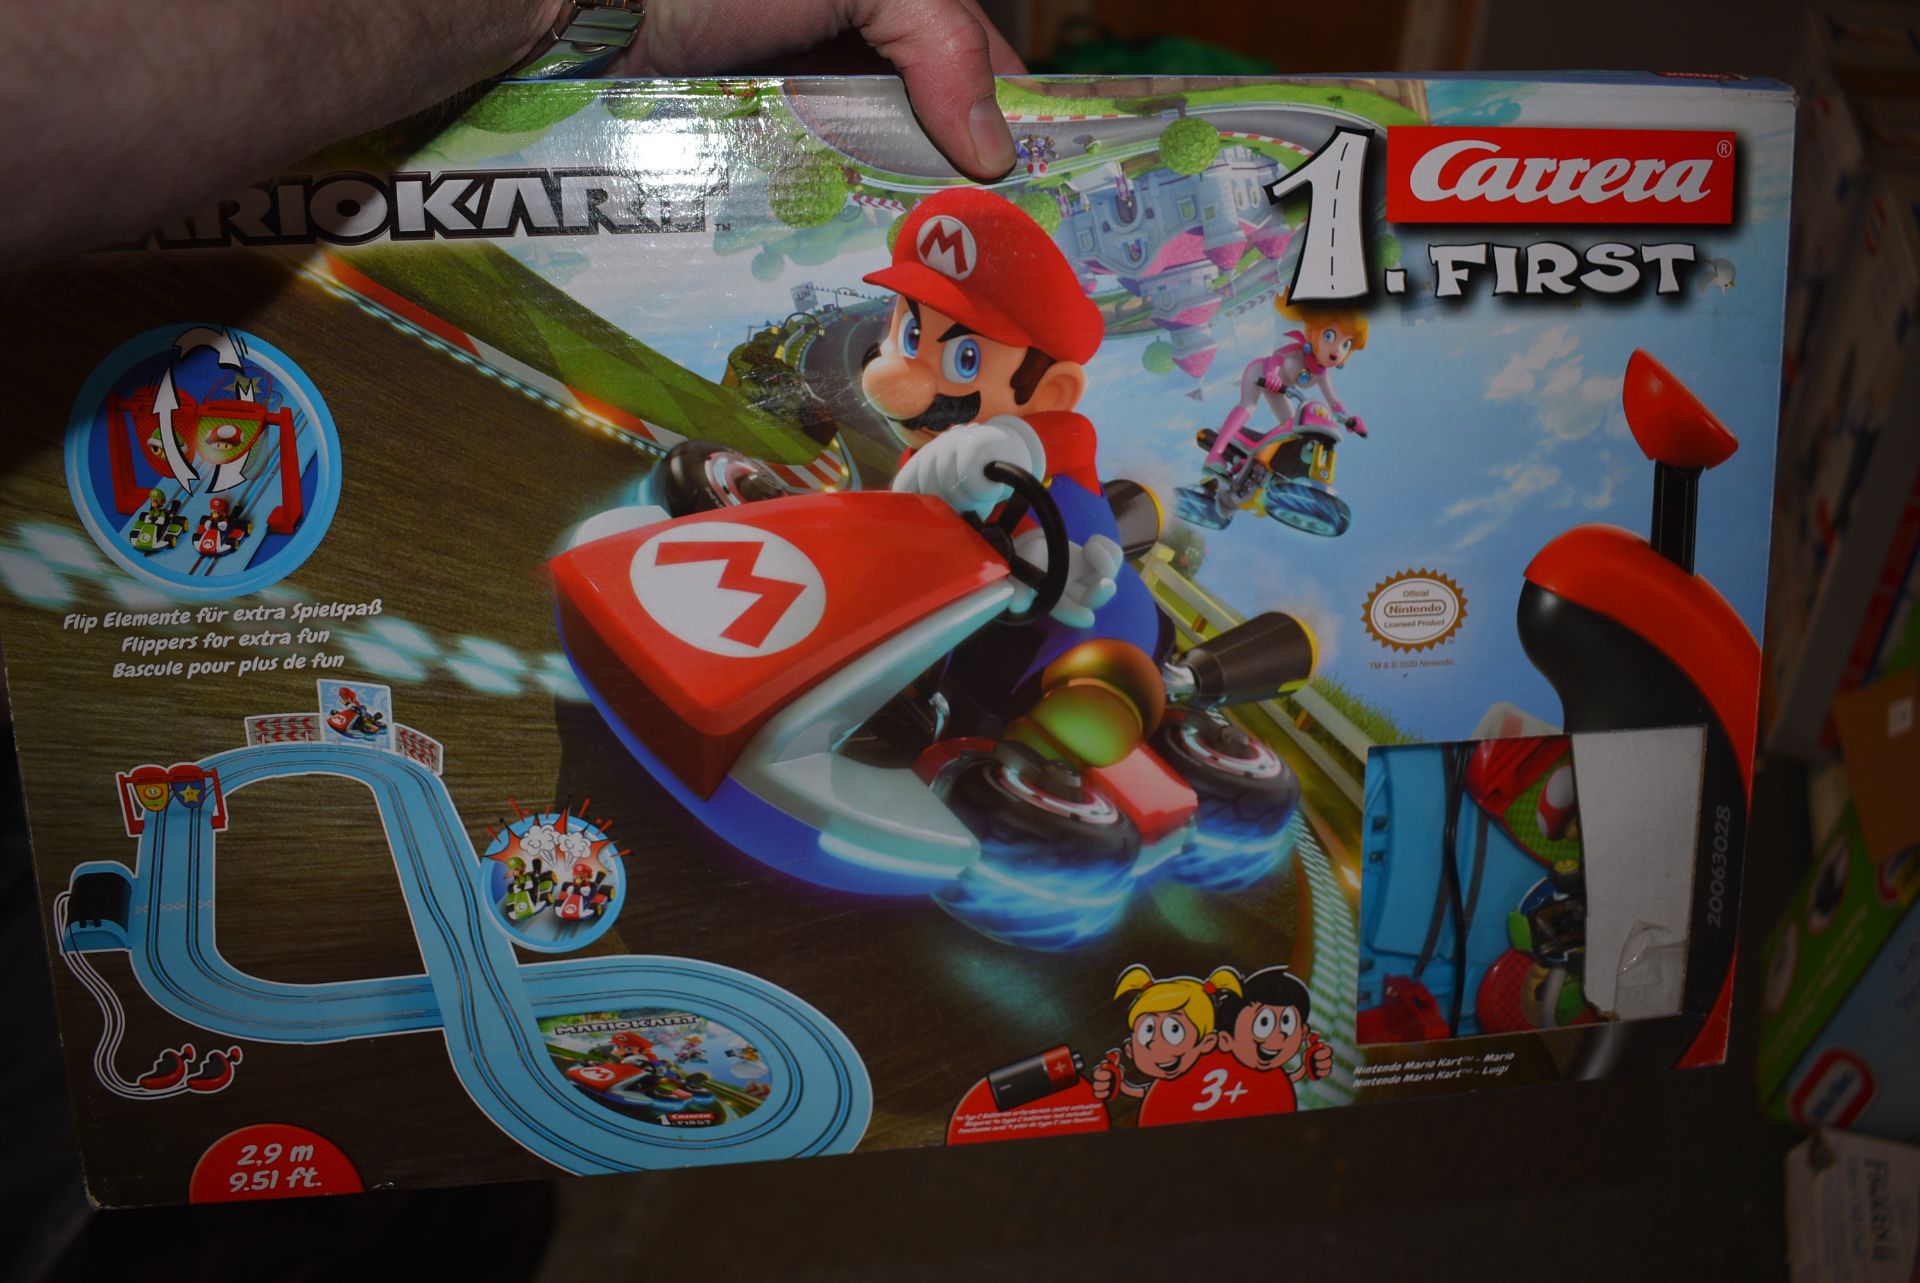 Carrera Mario Kart Track and Cars Set